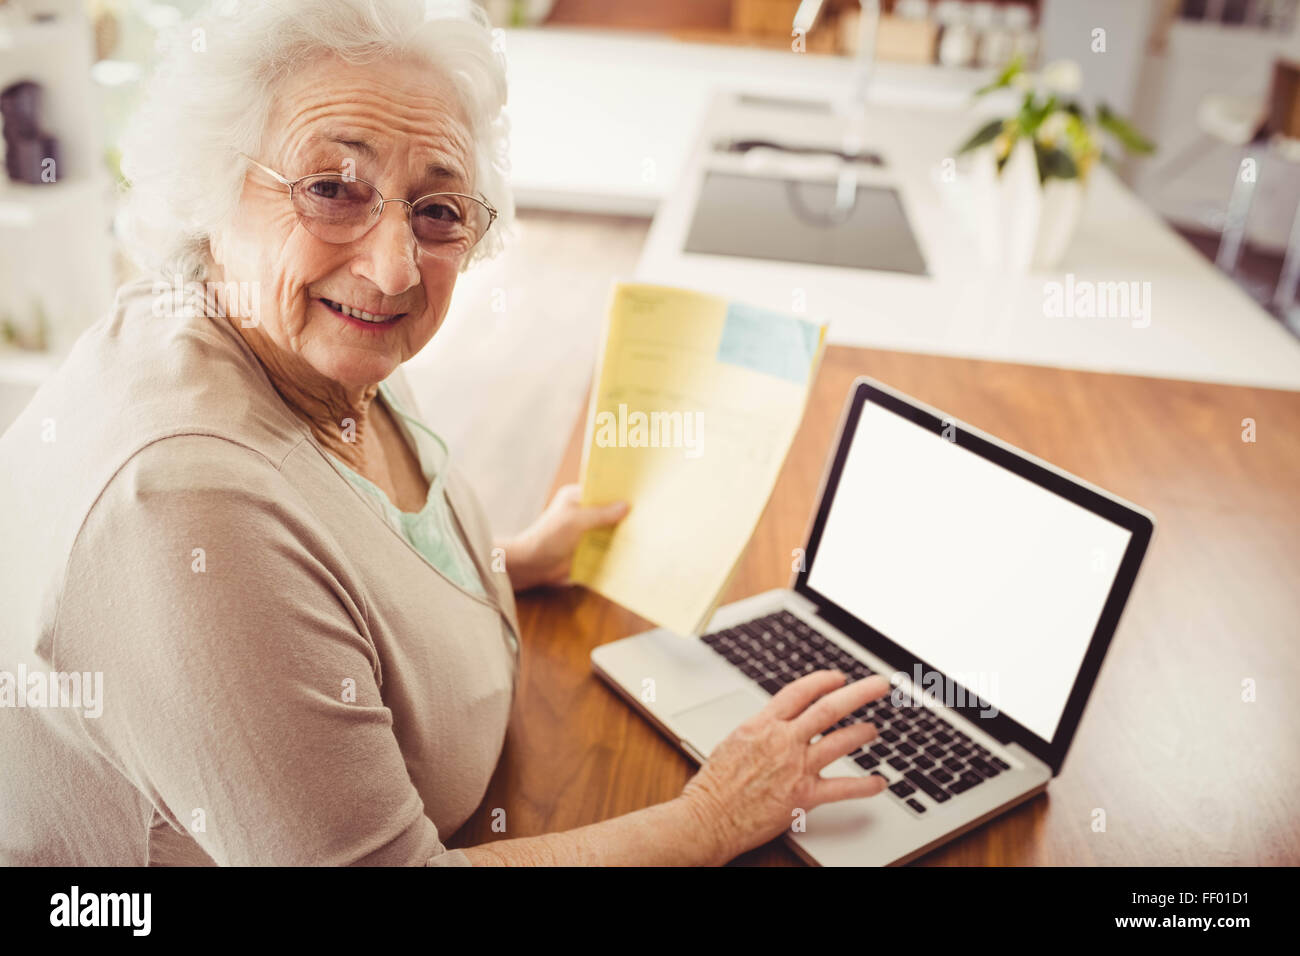 Elderly woman typing on laptop Stock Photo